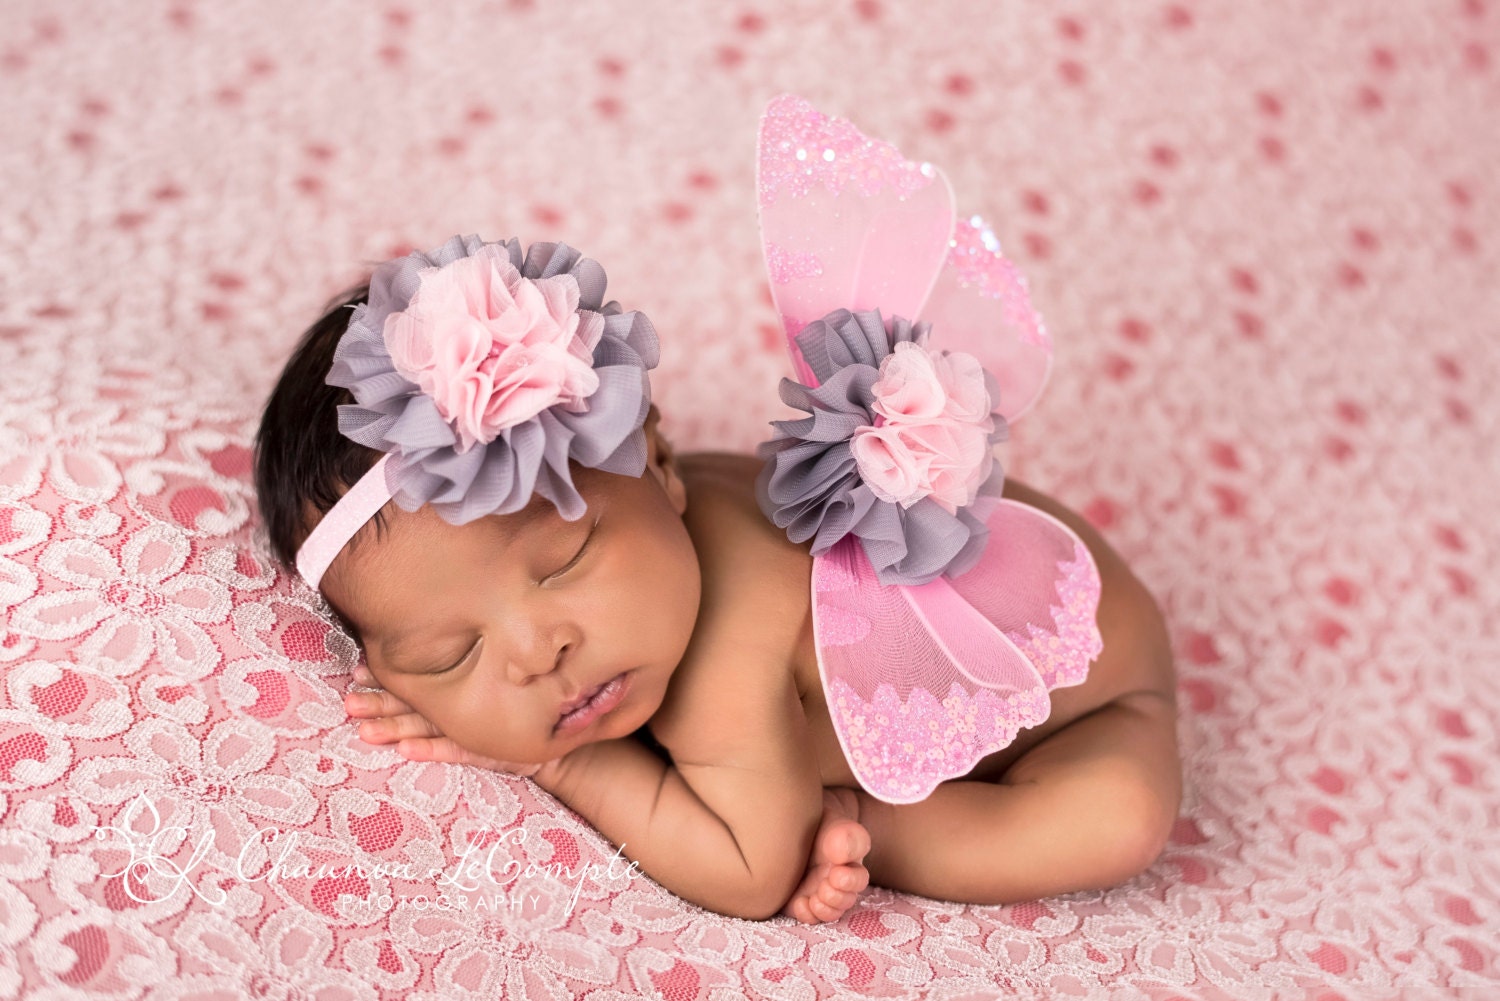 Pink and Grey Butterfly Wing Set / Newborn Wings / Newborn Wing Prop / Baby Girl Headband / Newborn Photo Prop / Newborn Butterfly Wings